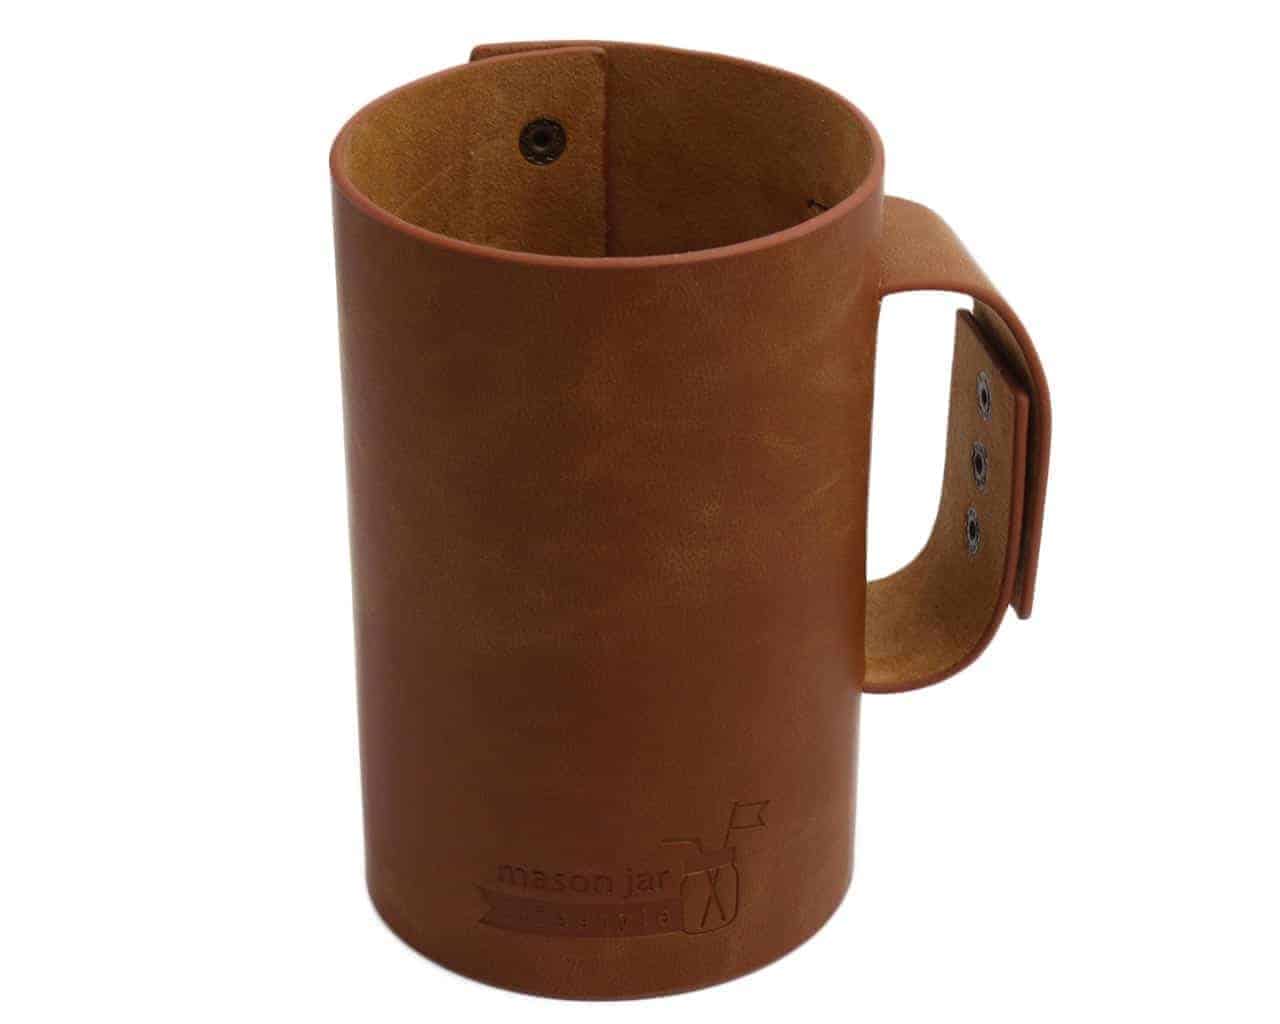 Faux leather sleeve with handle / travel mug for Ball pint & half 24oz jars